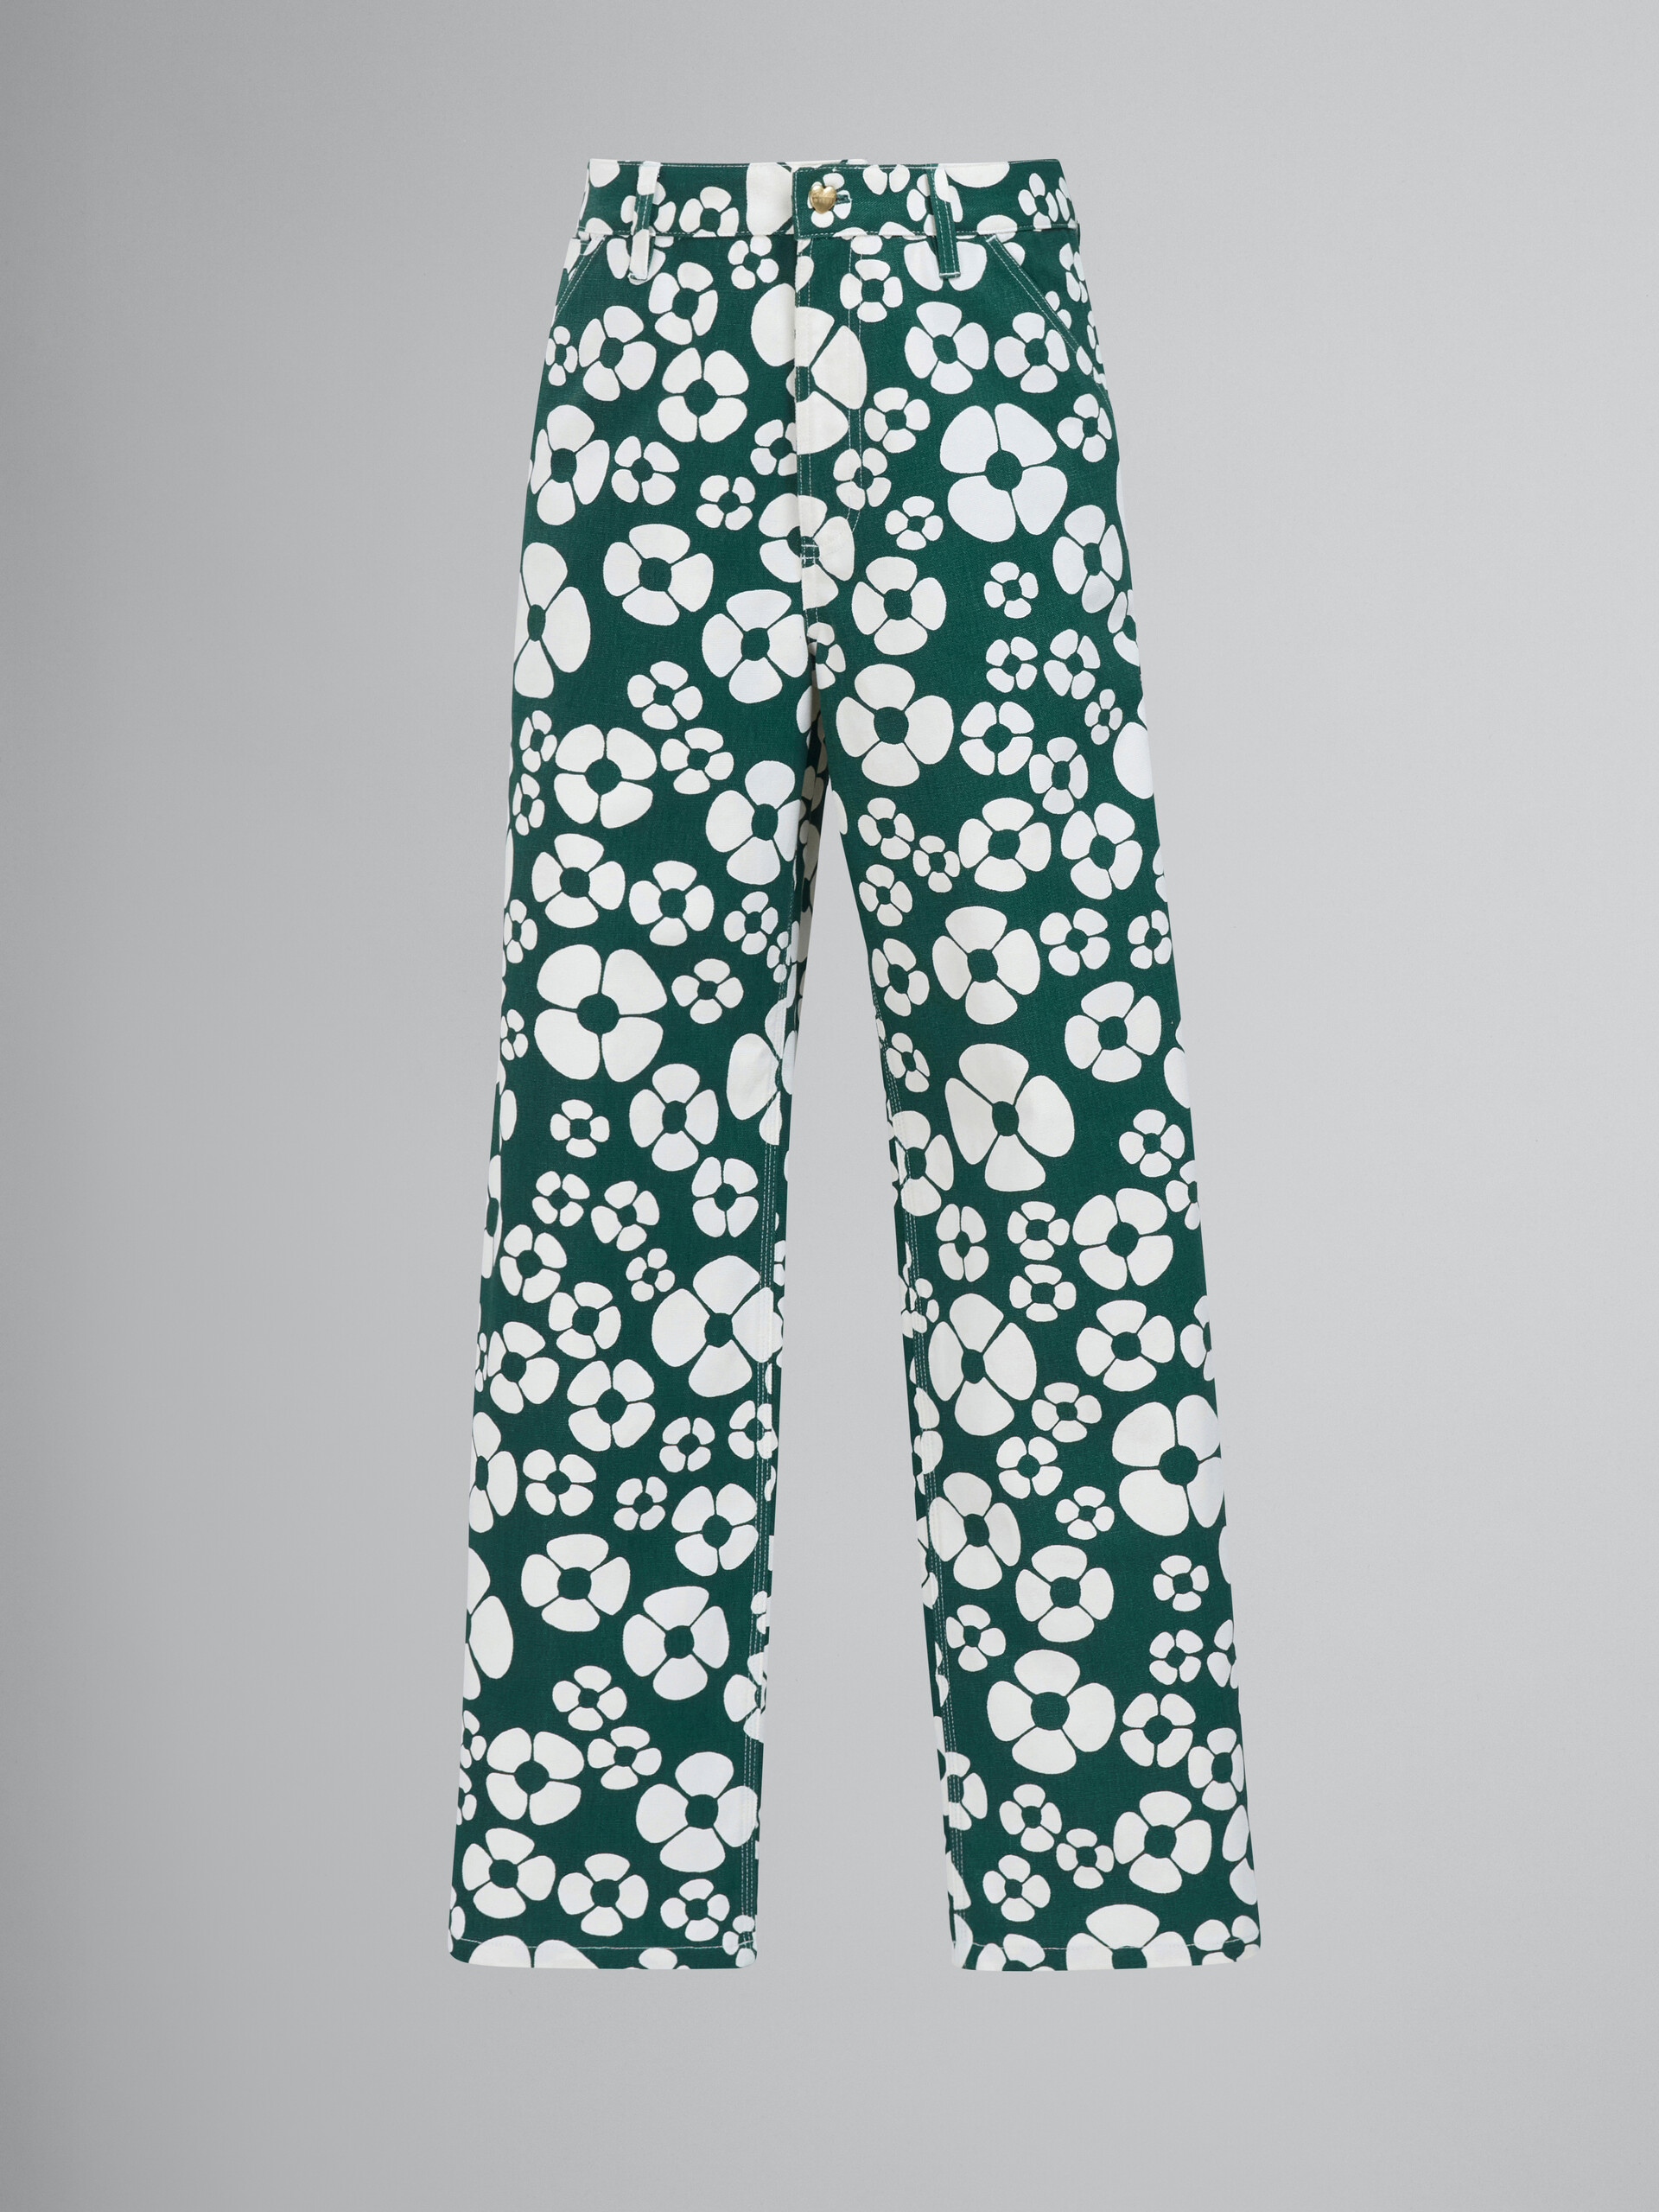 MARNI x CARHARTT WIP - Pantalón floral verde - Pantalones - Image 1